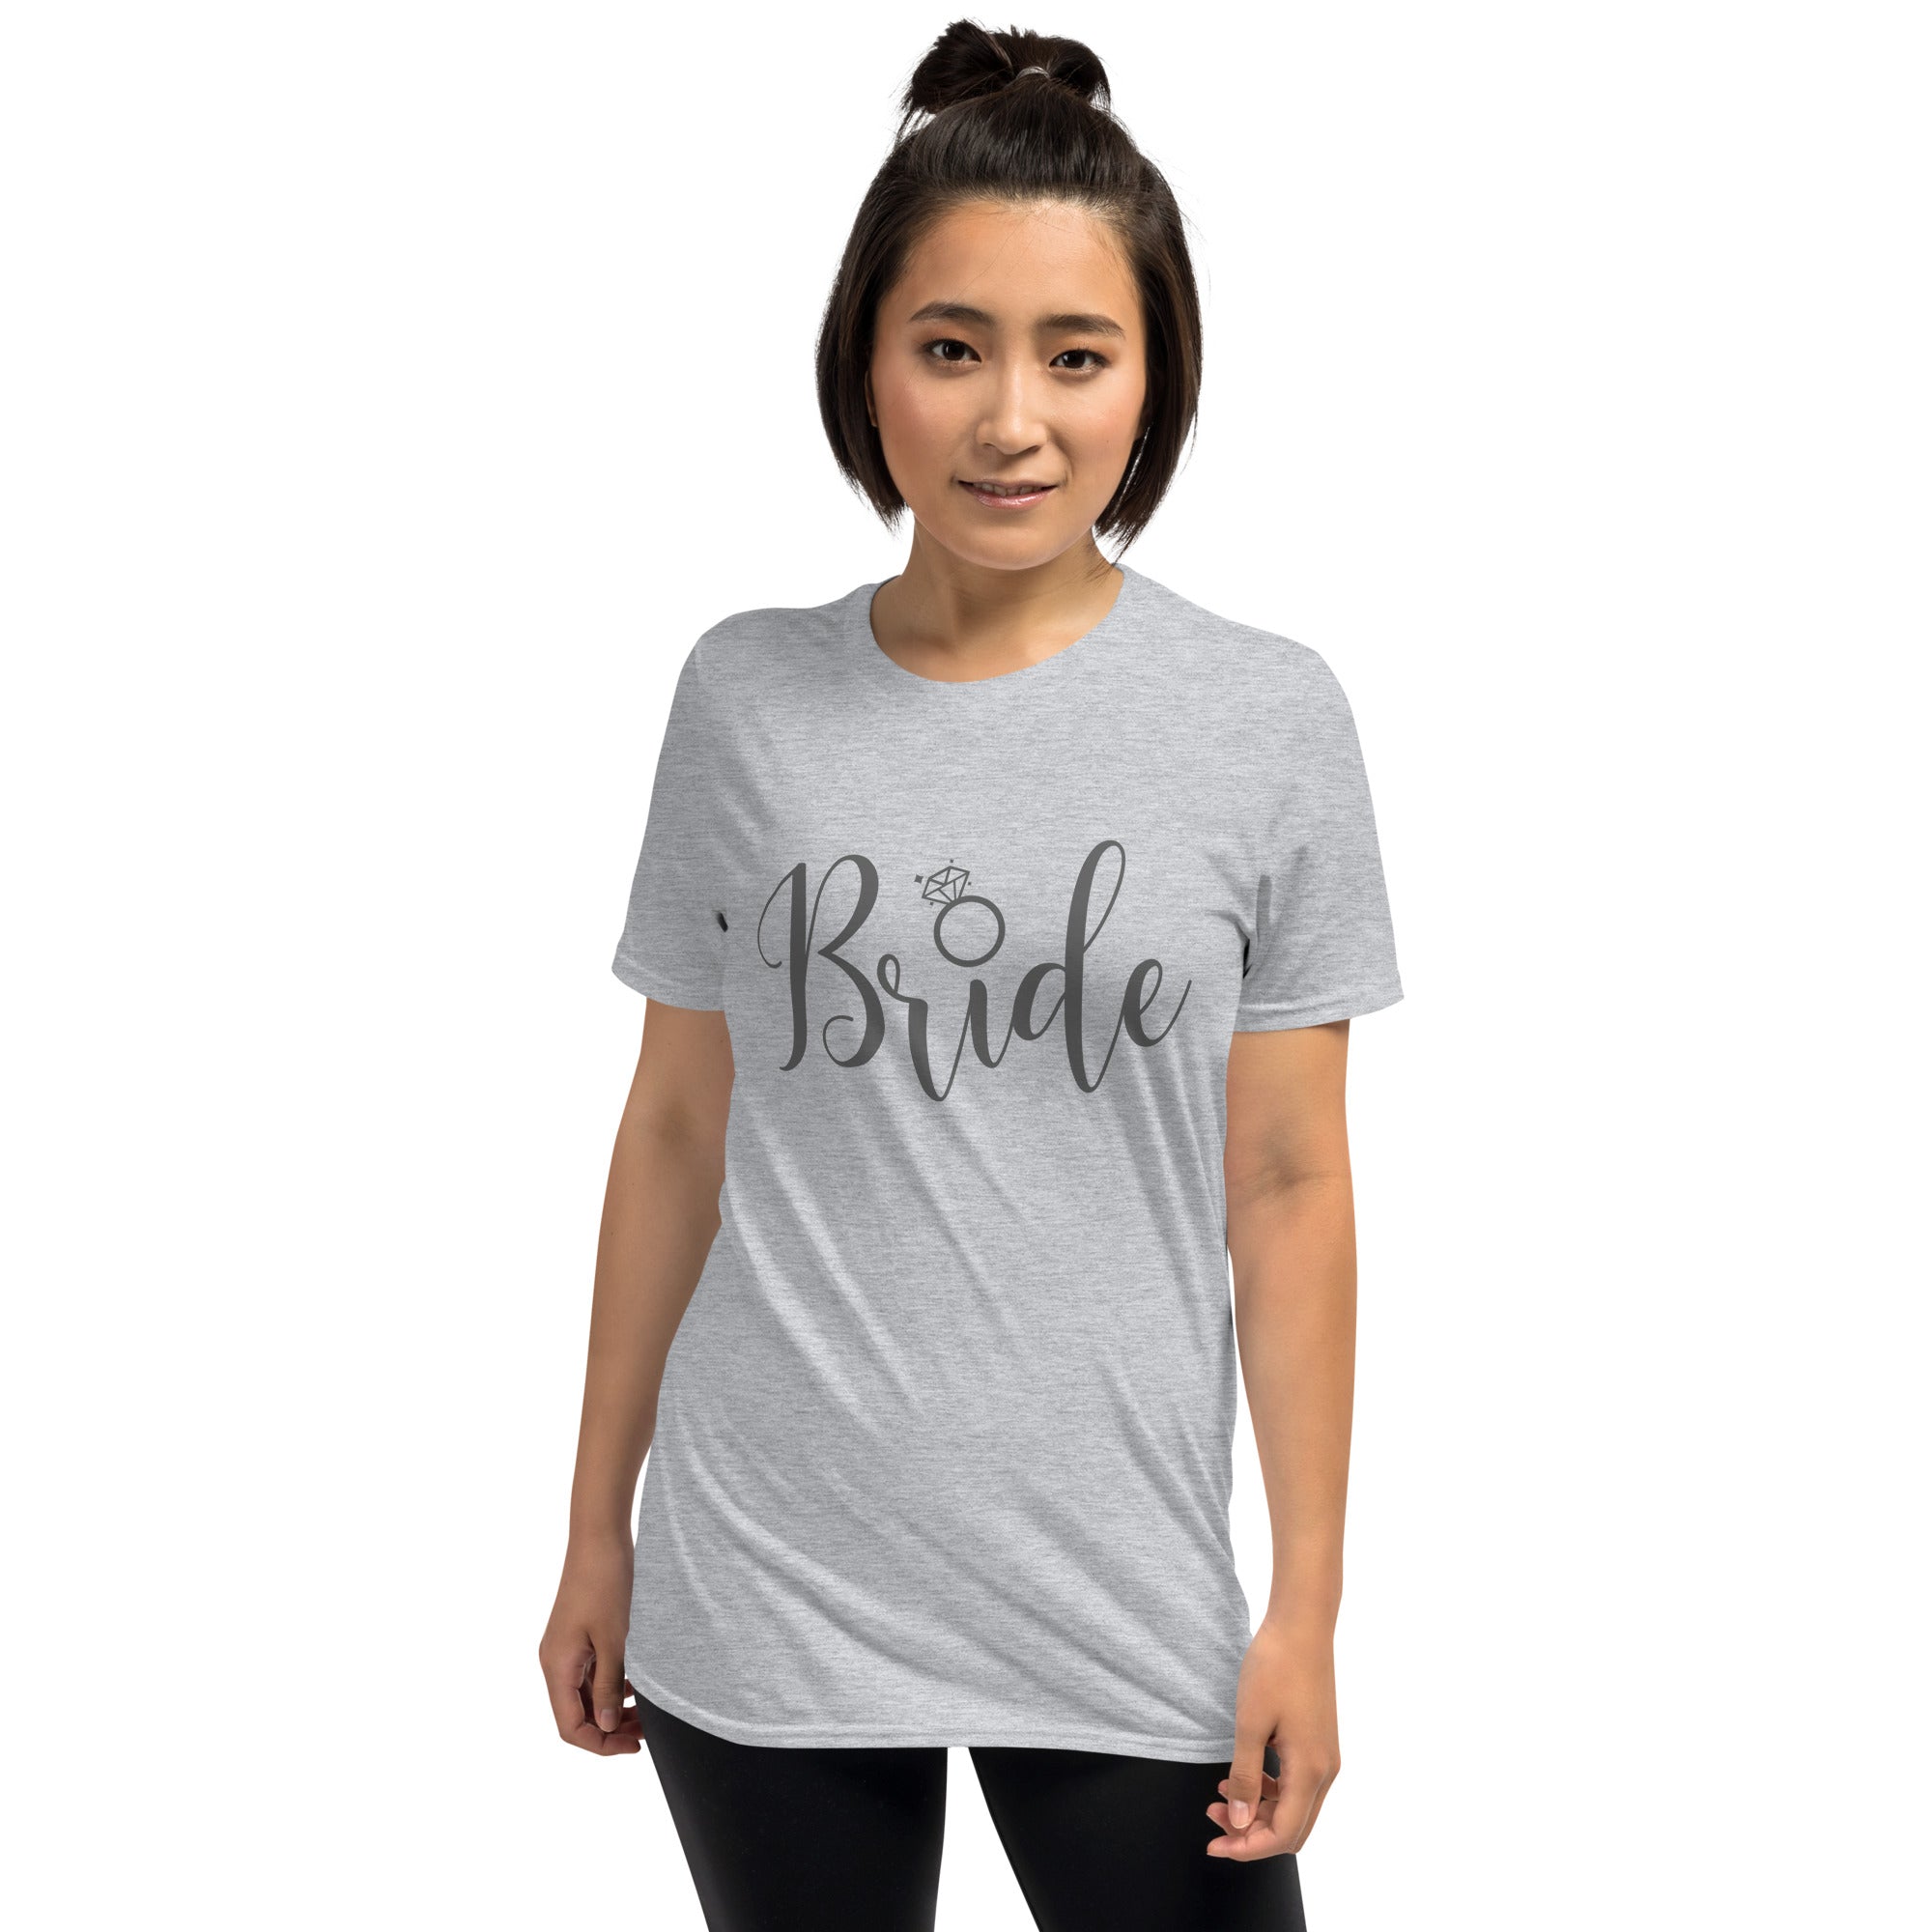 Bride - Short-Sleeve Unisex T-Shirt